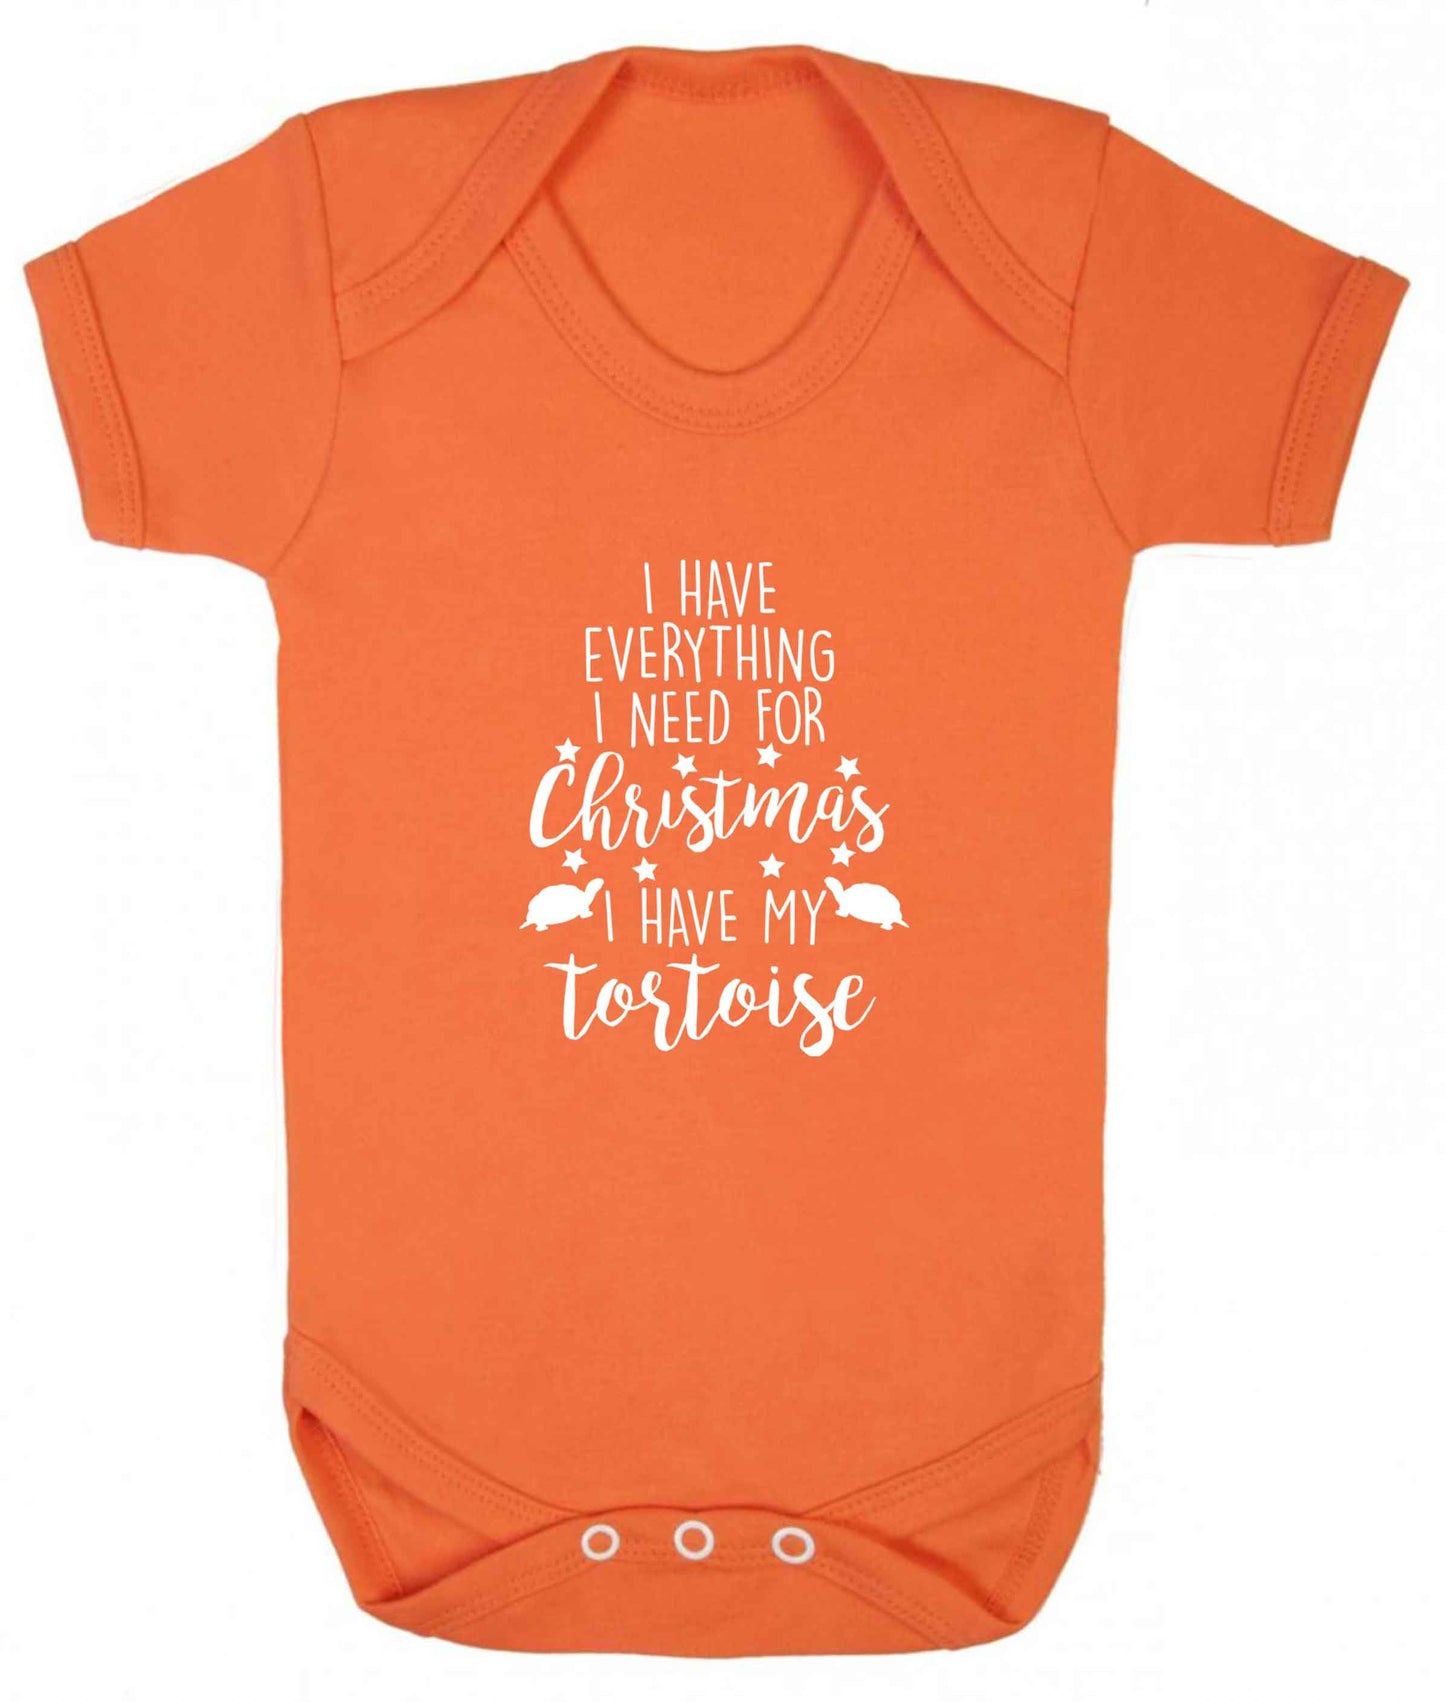 I have everything I need for Christmas I have my tortoise baby vest orange 18-24 months